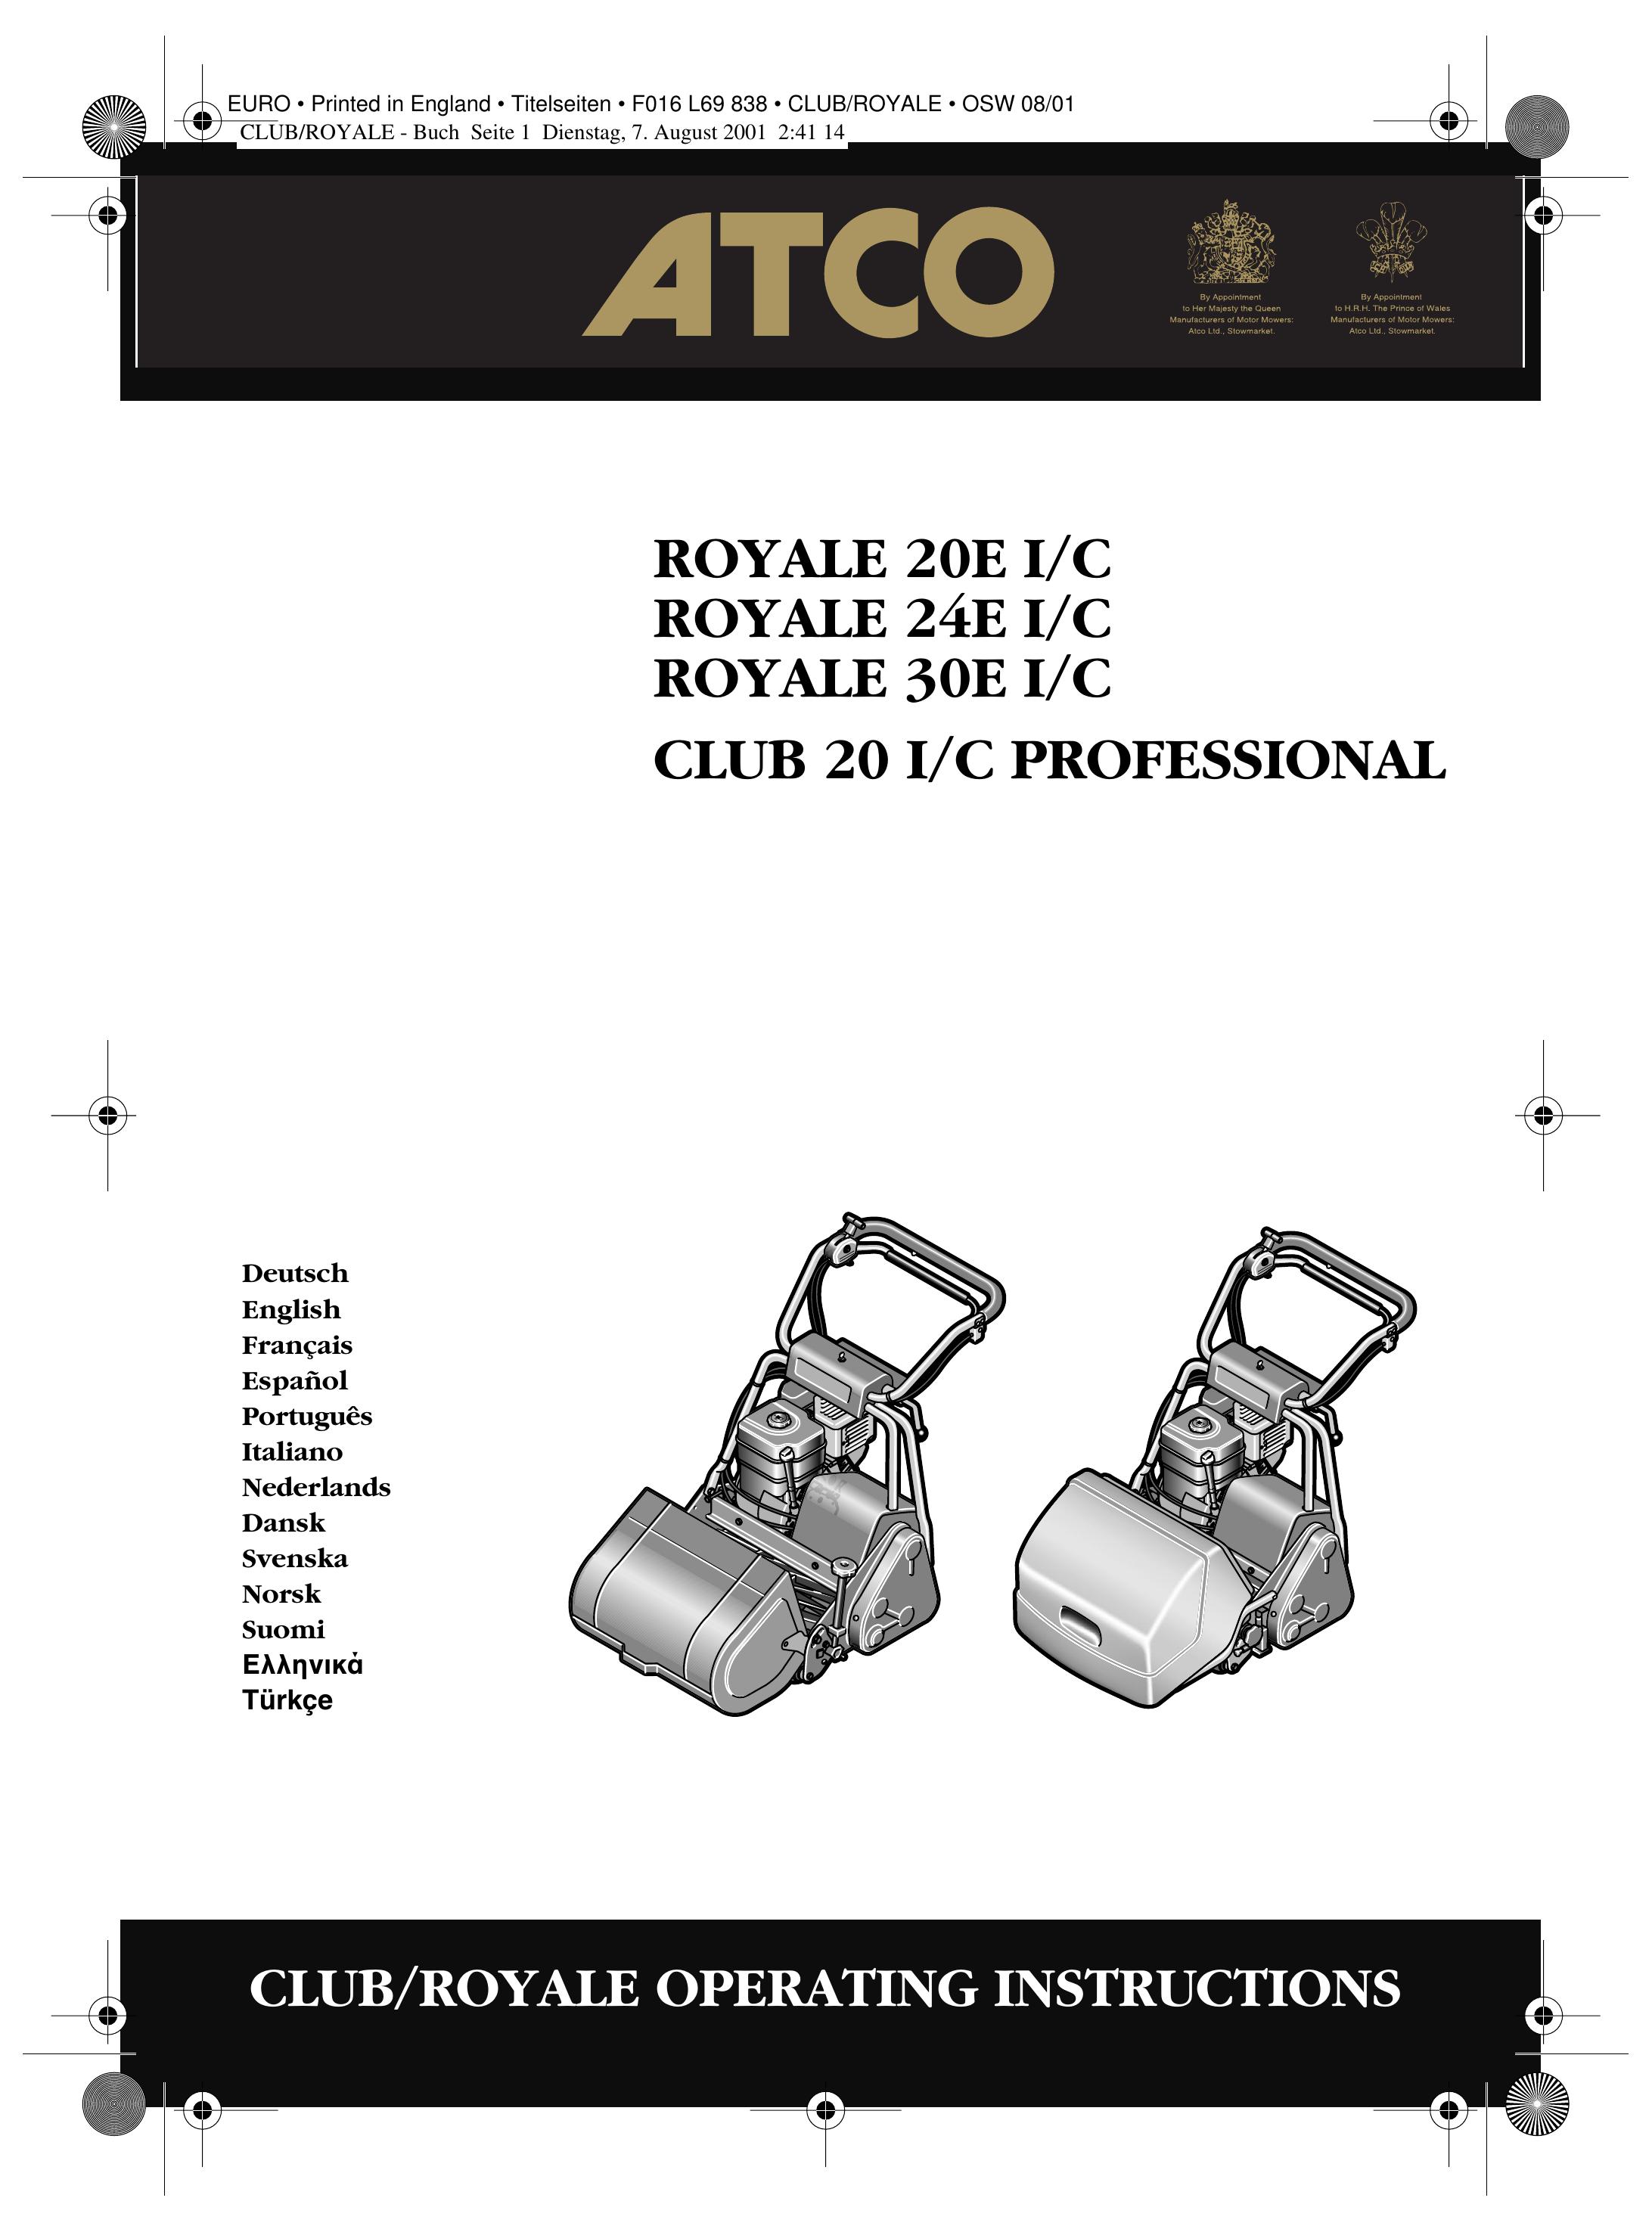 Atco ROYALE 20E I/C, ROYALE 24E I/C, ROYALE 30E I/C, CLUB 20 I/C PROFESSIONAL Lawn Mower User Manual